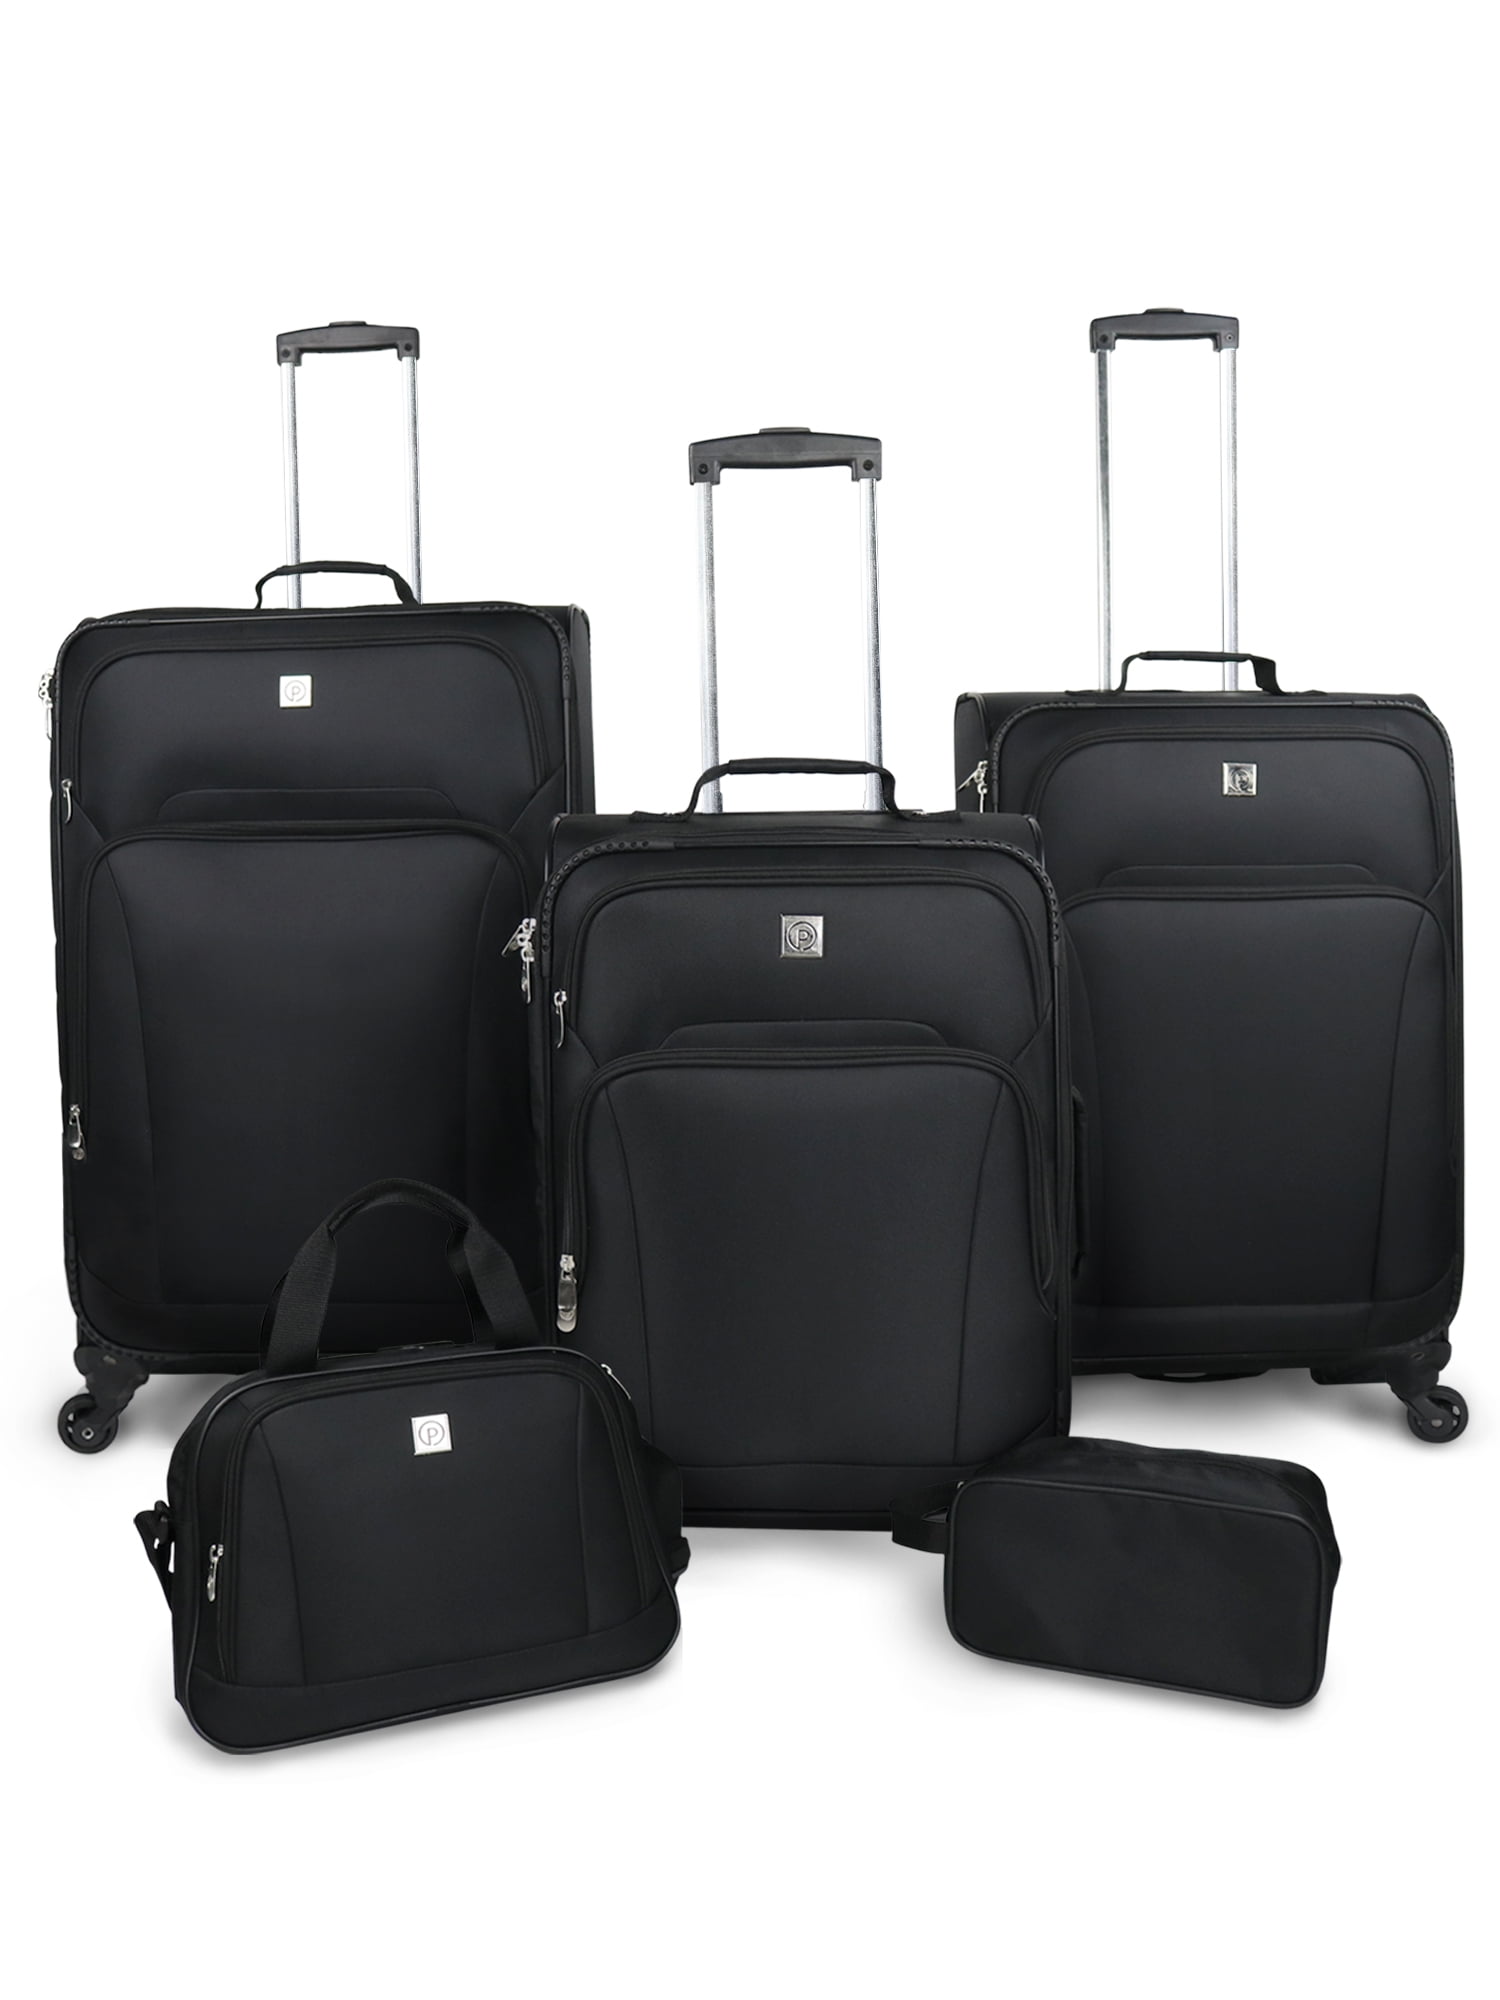 Protege 5 Piece Spinner Luggage Set - Walmart.com